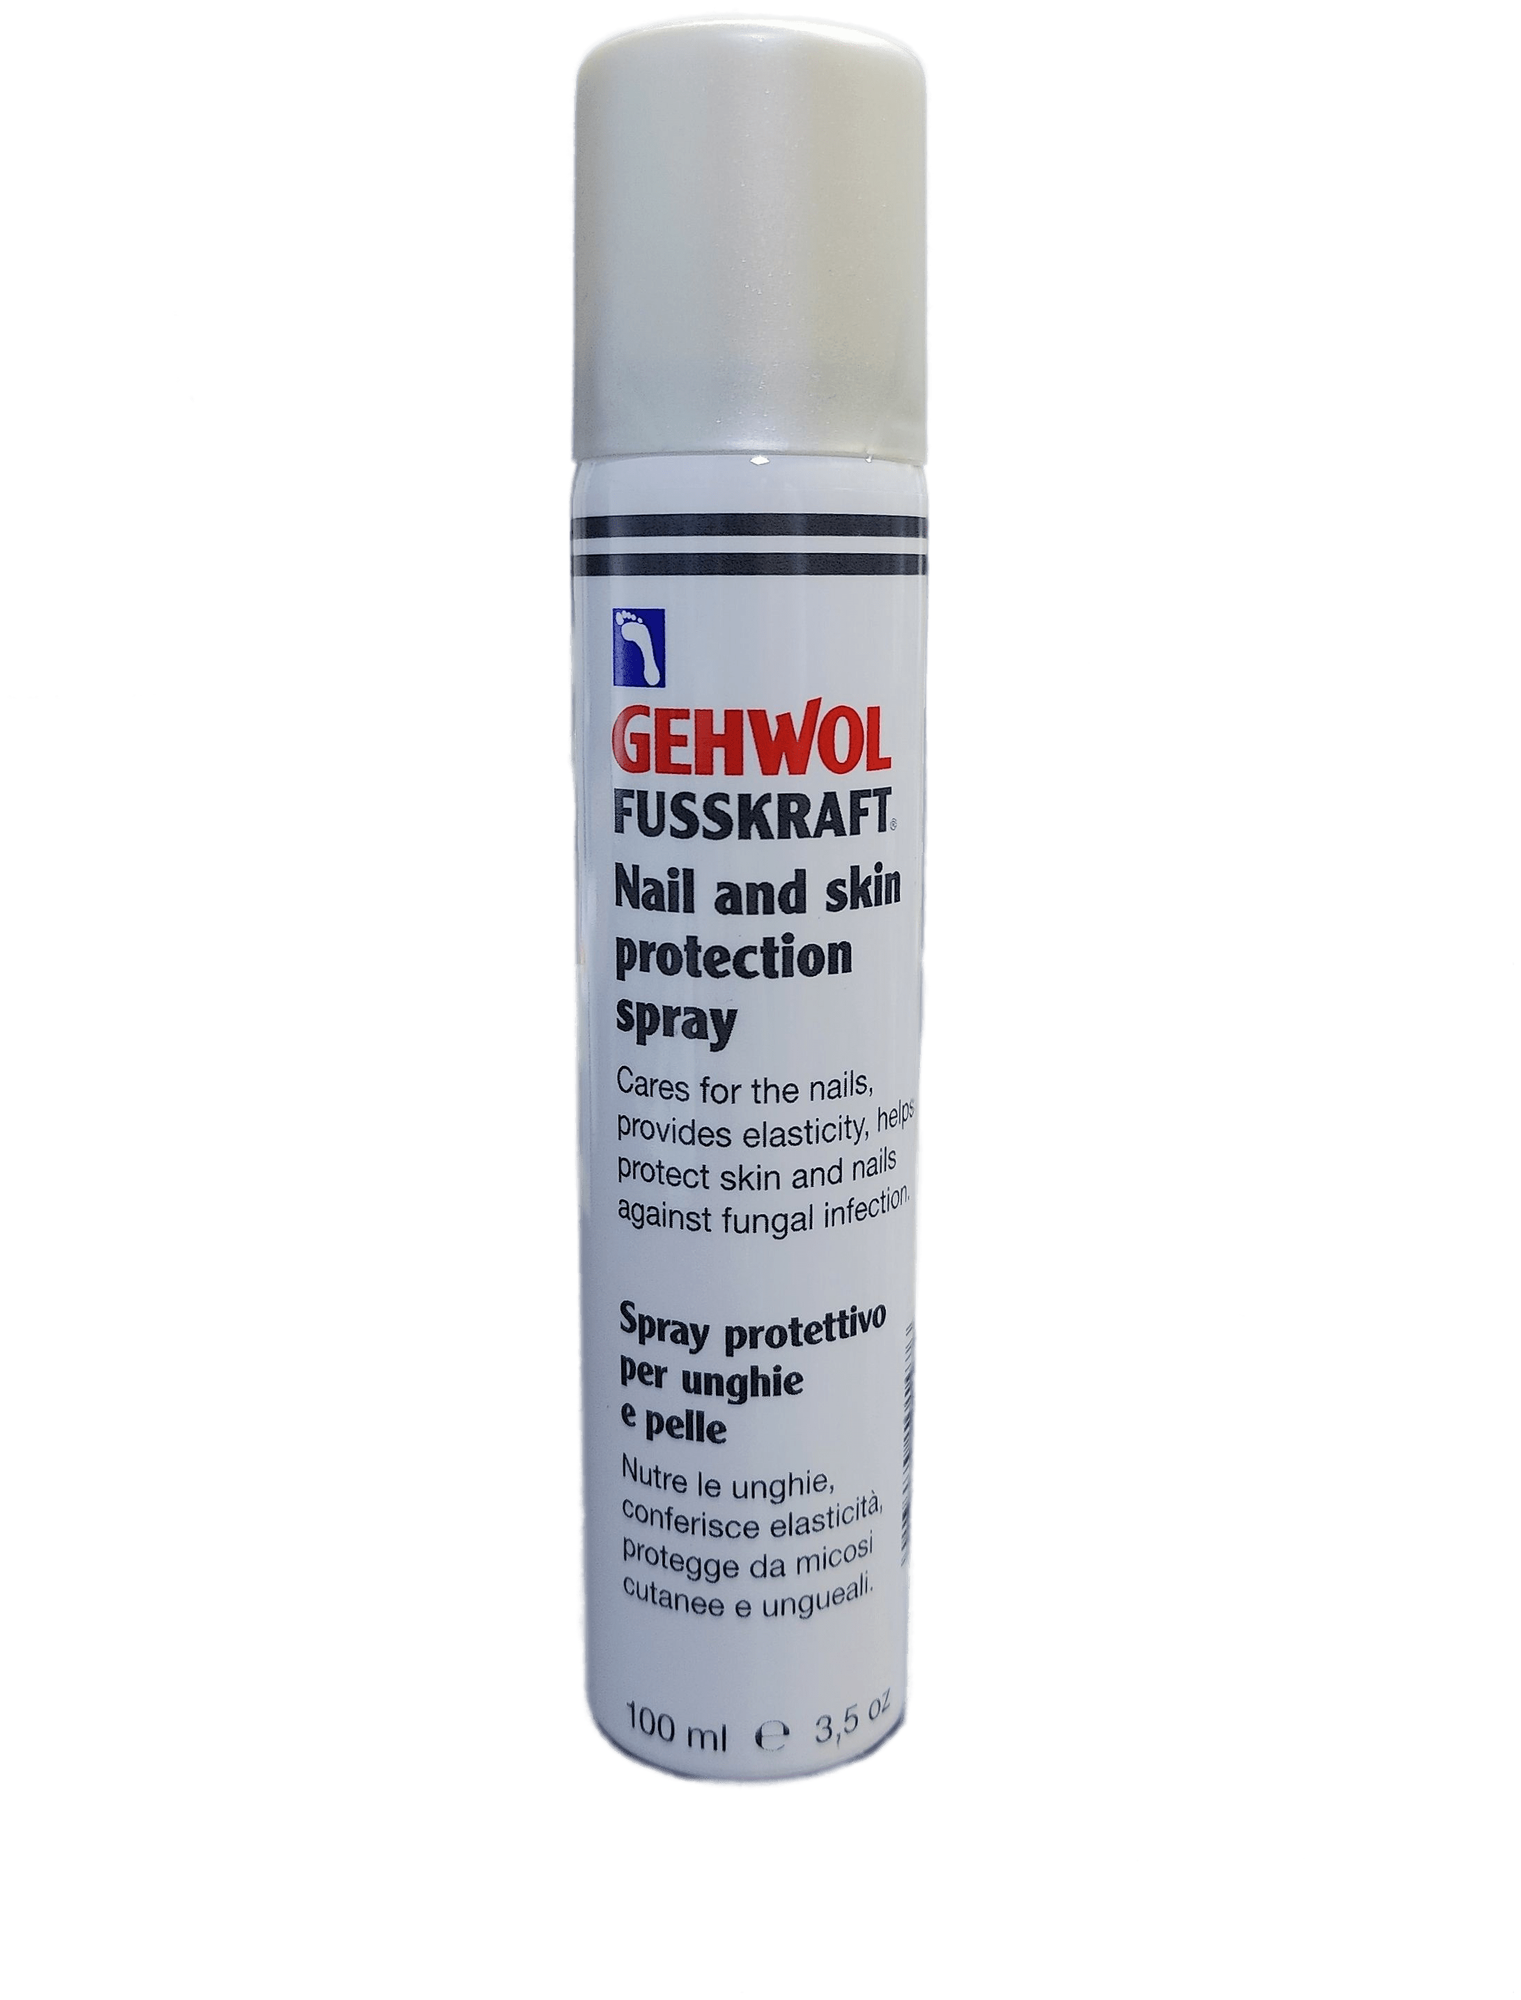 Gehwol Fusskraft Nail and Skin Protection Spray - Защитный спрей Фусскрафт 100 мл